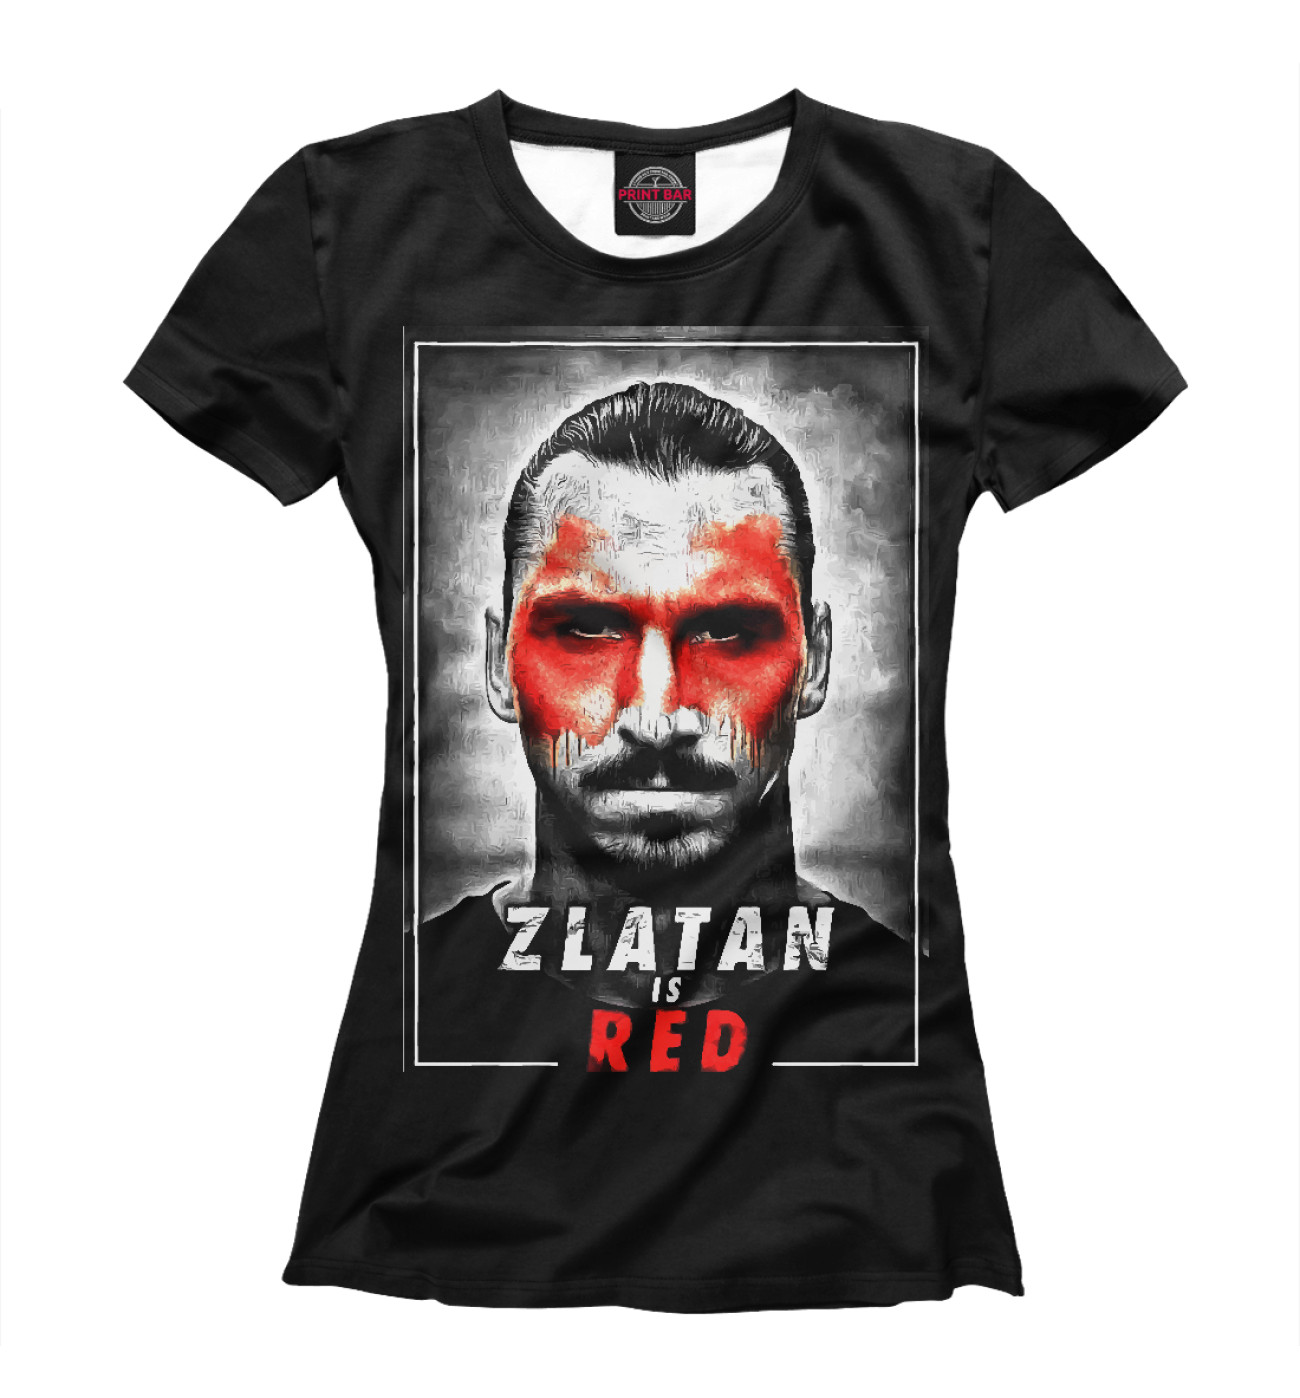 Женская Футболка Zlatan is Red, артикул: MAN-840663-fut-1